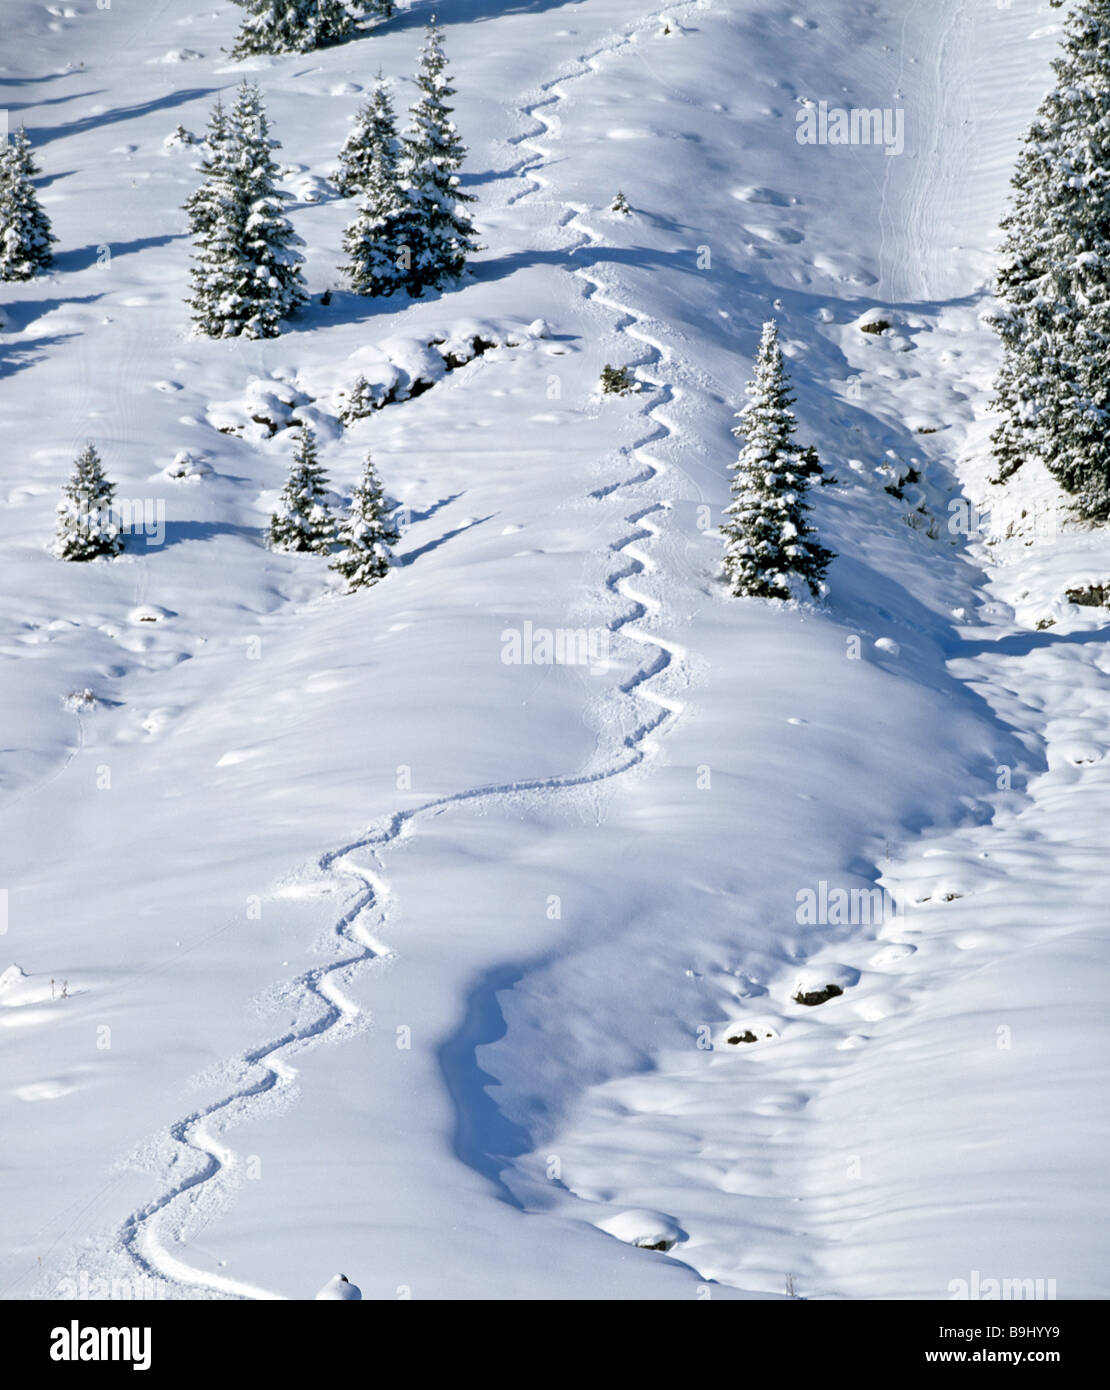 Langlaufloipen im Tiefschnee, wedeln, Snoe bedeckten Winterlandschaft Stockfoto